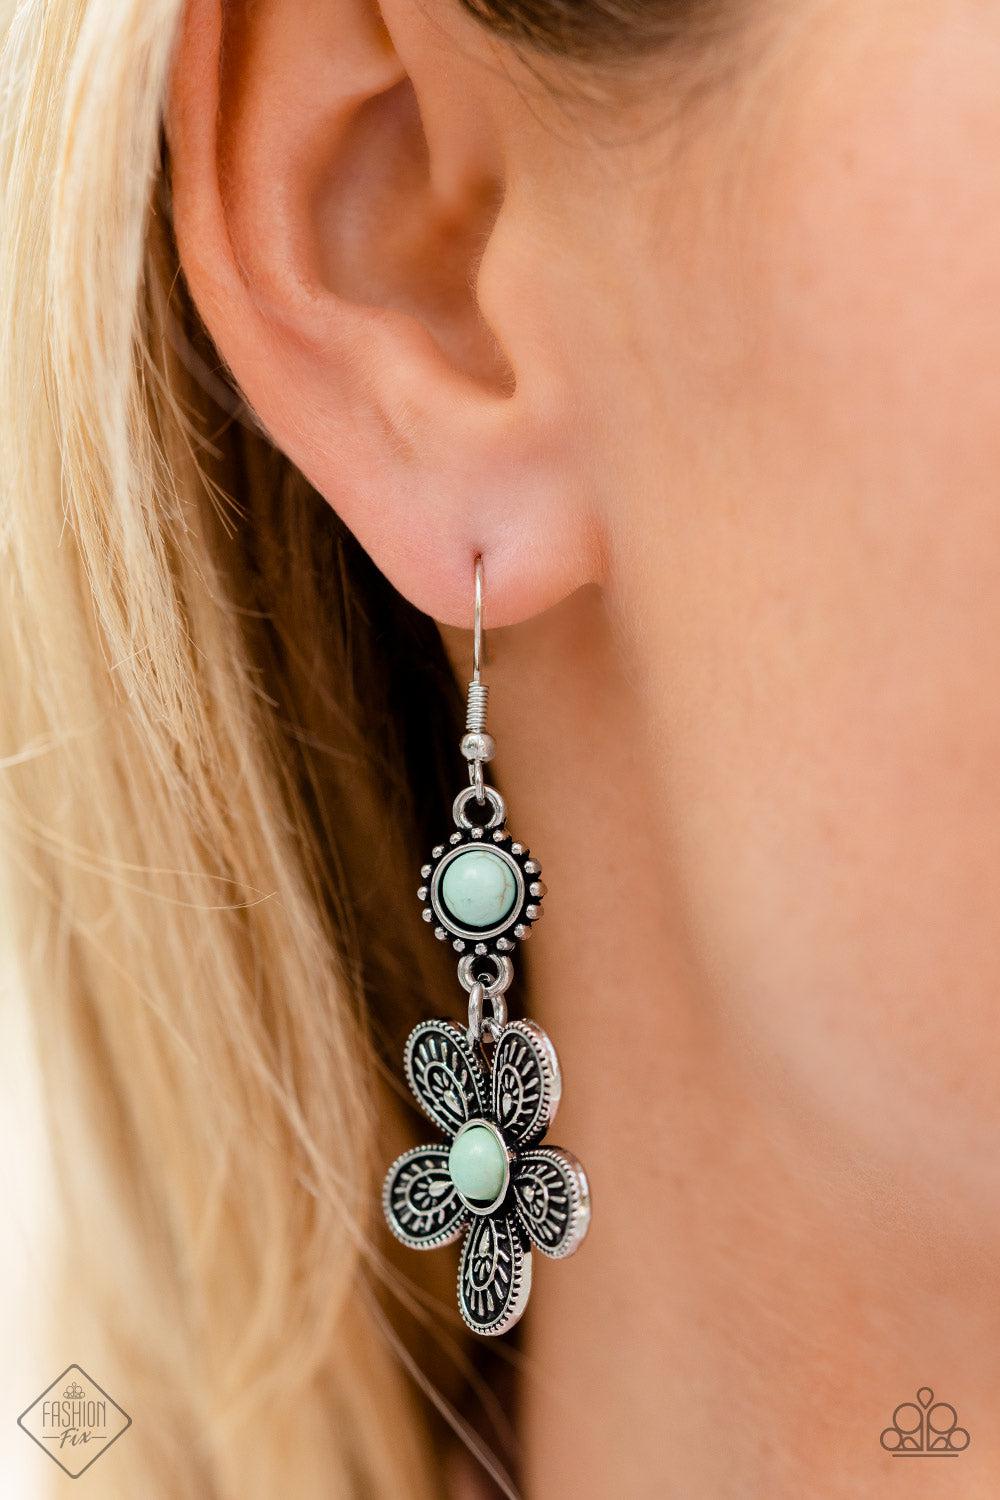 Free-Spirited Flourish Blue Stone Flower Earrings - Paparazzi Accessories-on model - CarasShop.com - $5 Jewelry by Cara Jewels